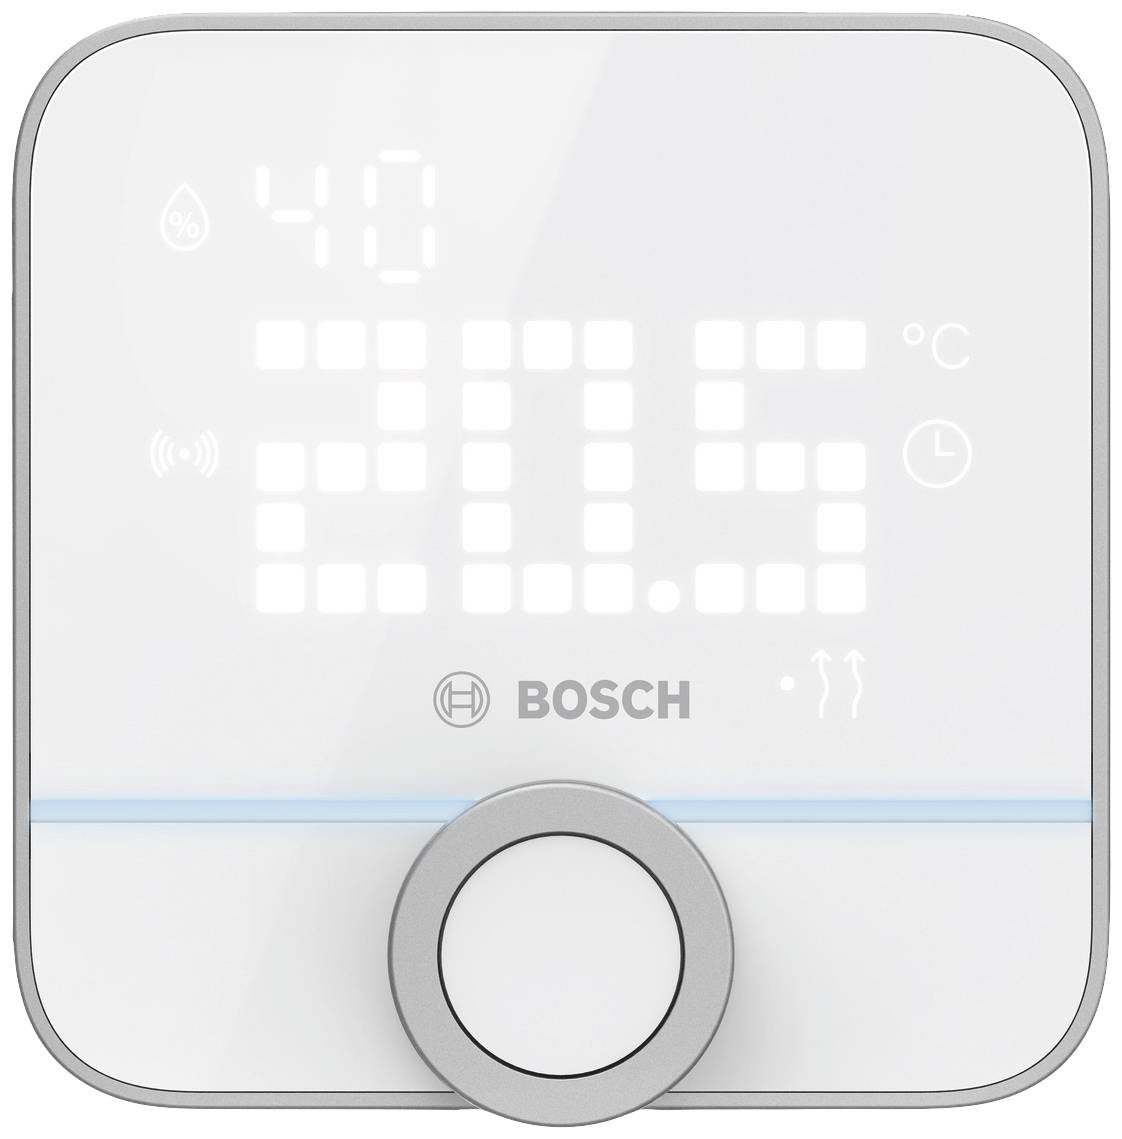 BOSCH Smart Home - II - Raumthermostat - kabellos (8750002414)